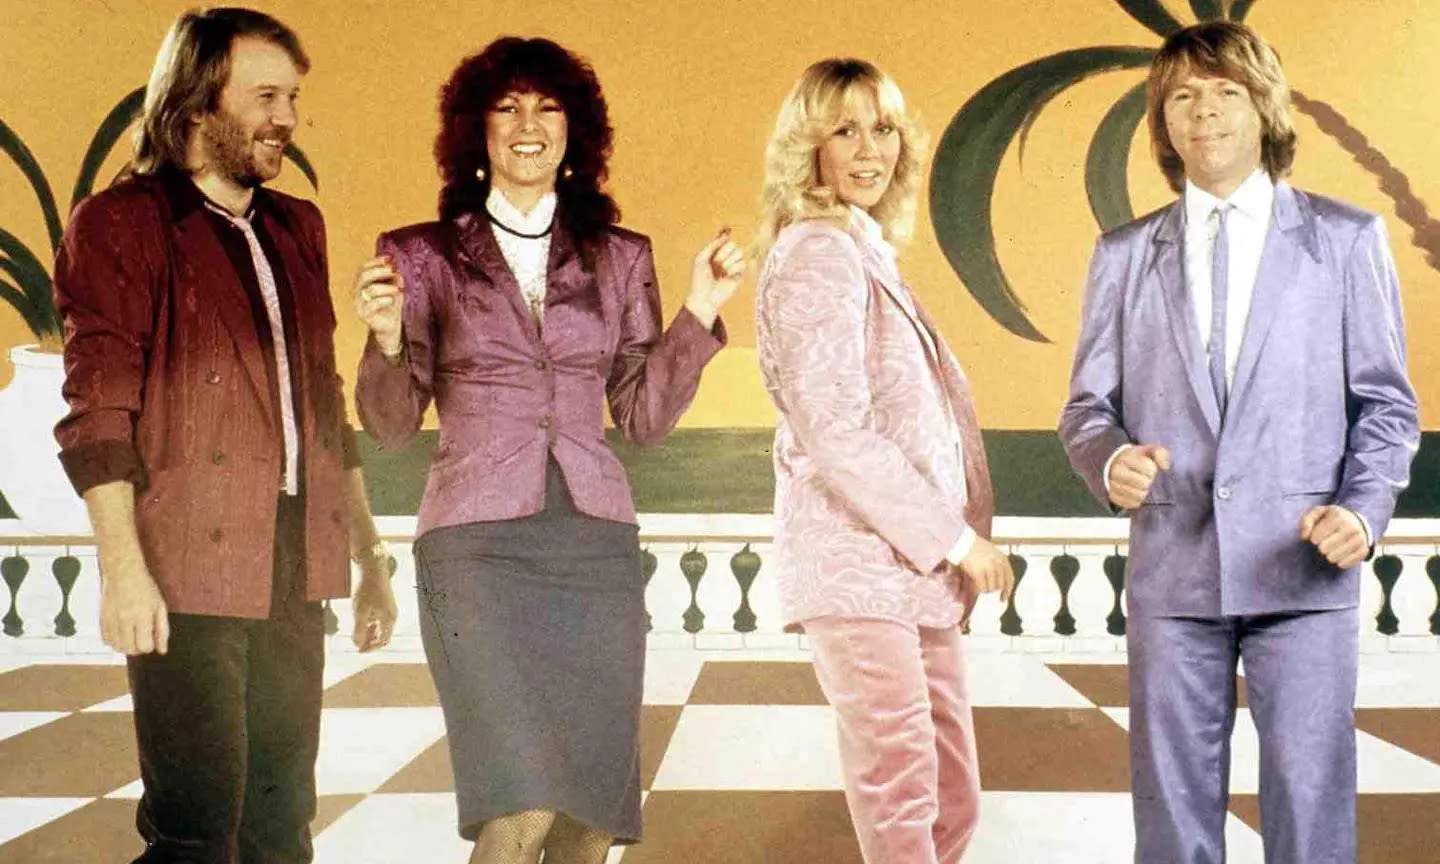 ABBA Members Receive Swedish Knighthood Honor